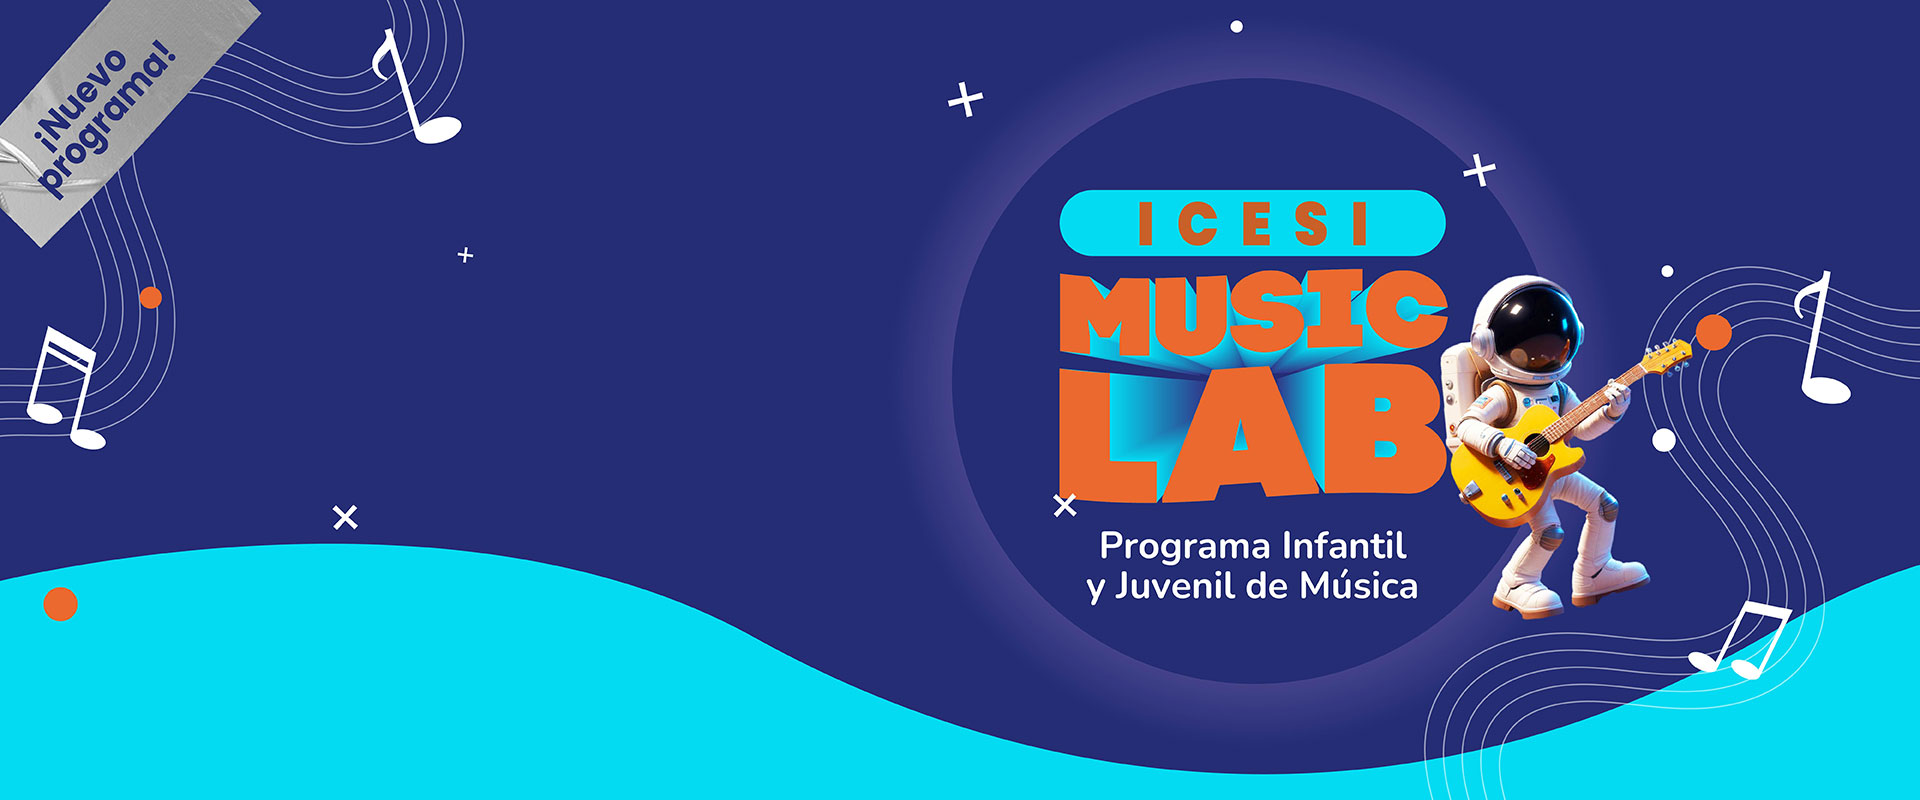 ICESI MUSIC LAB: Programa infantil y juvenil de música